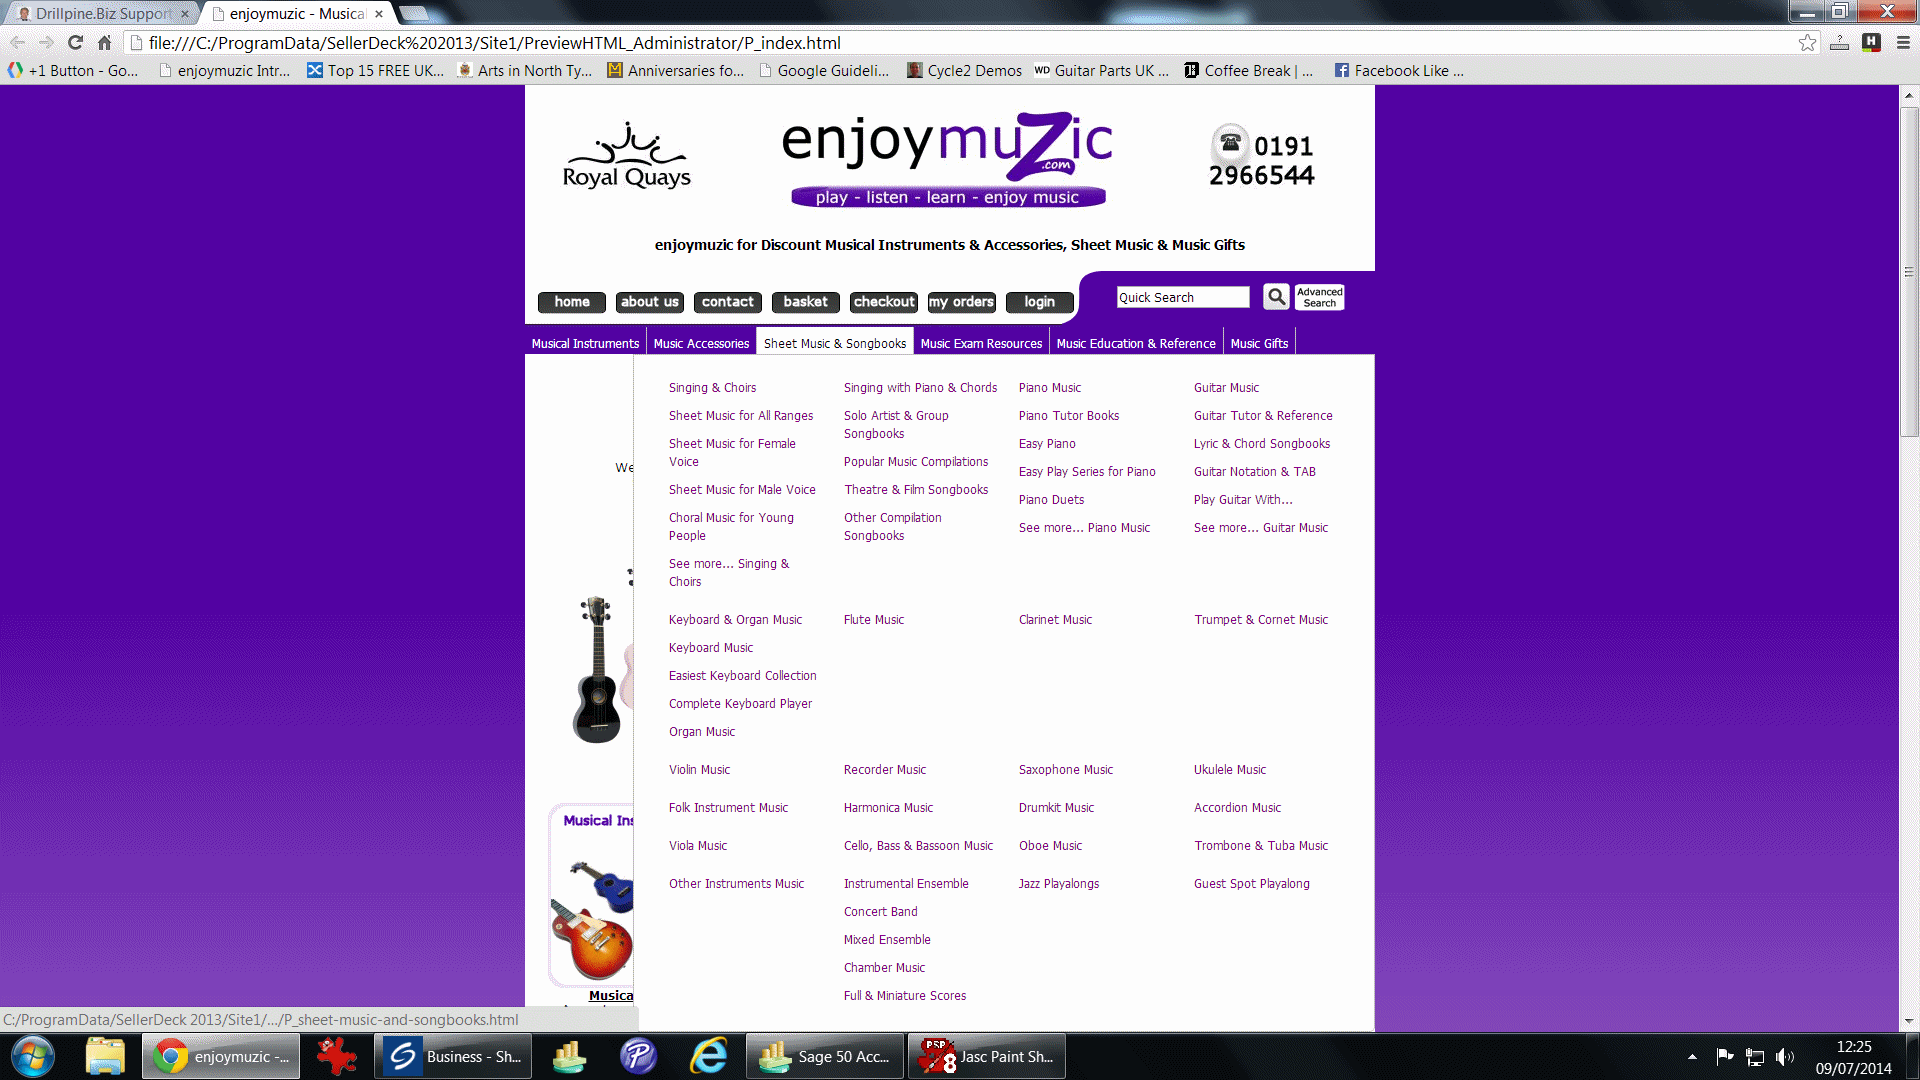 enjoymuzic menu snapshot